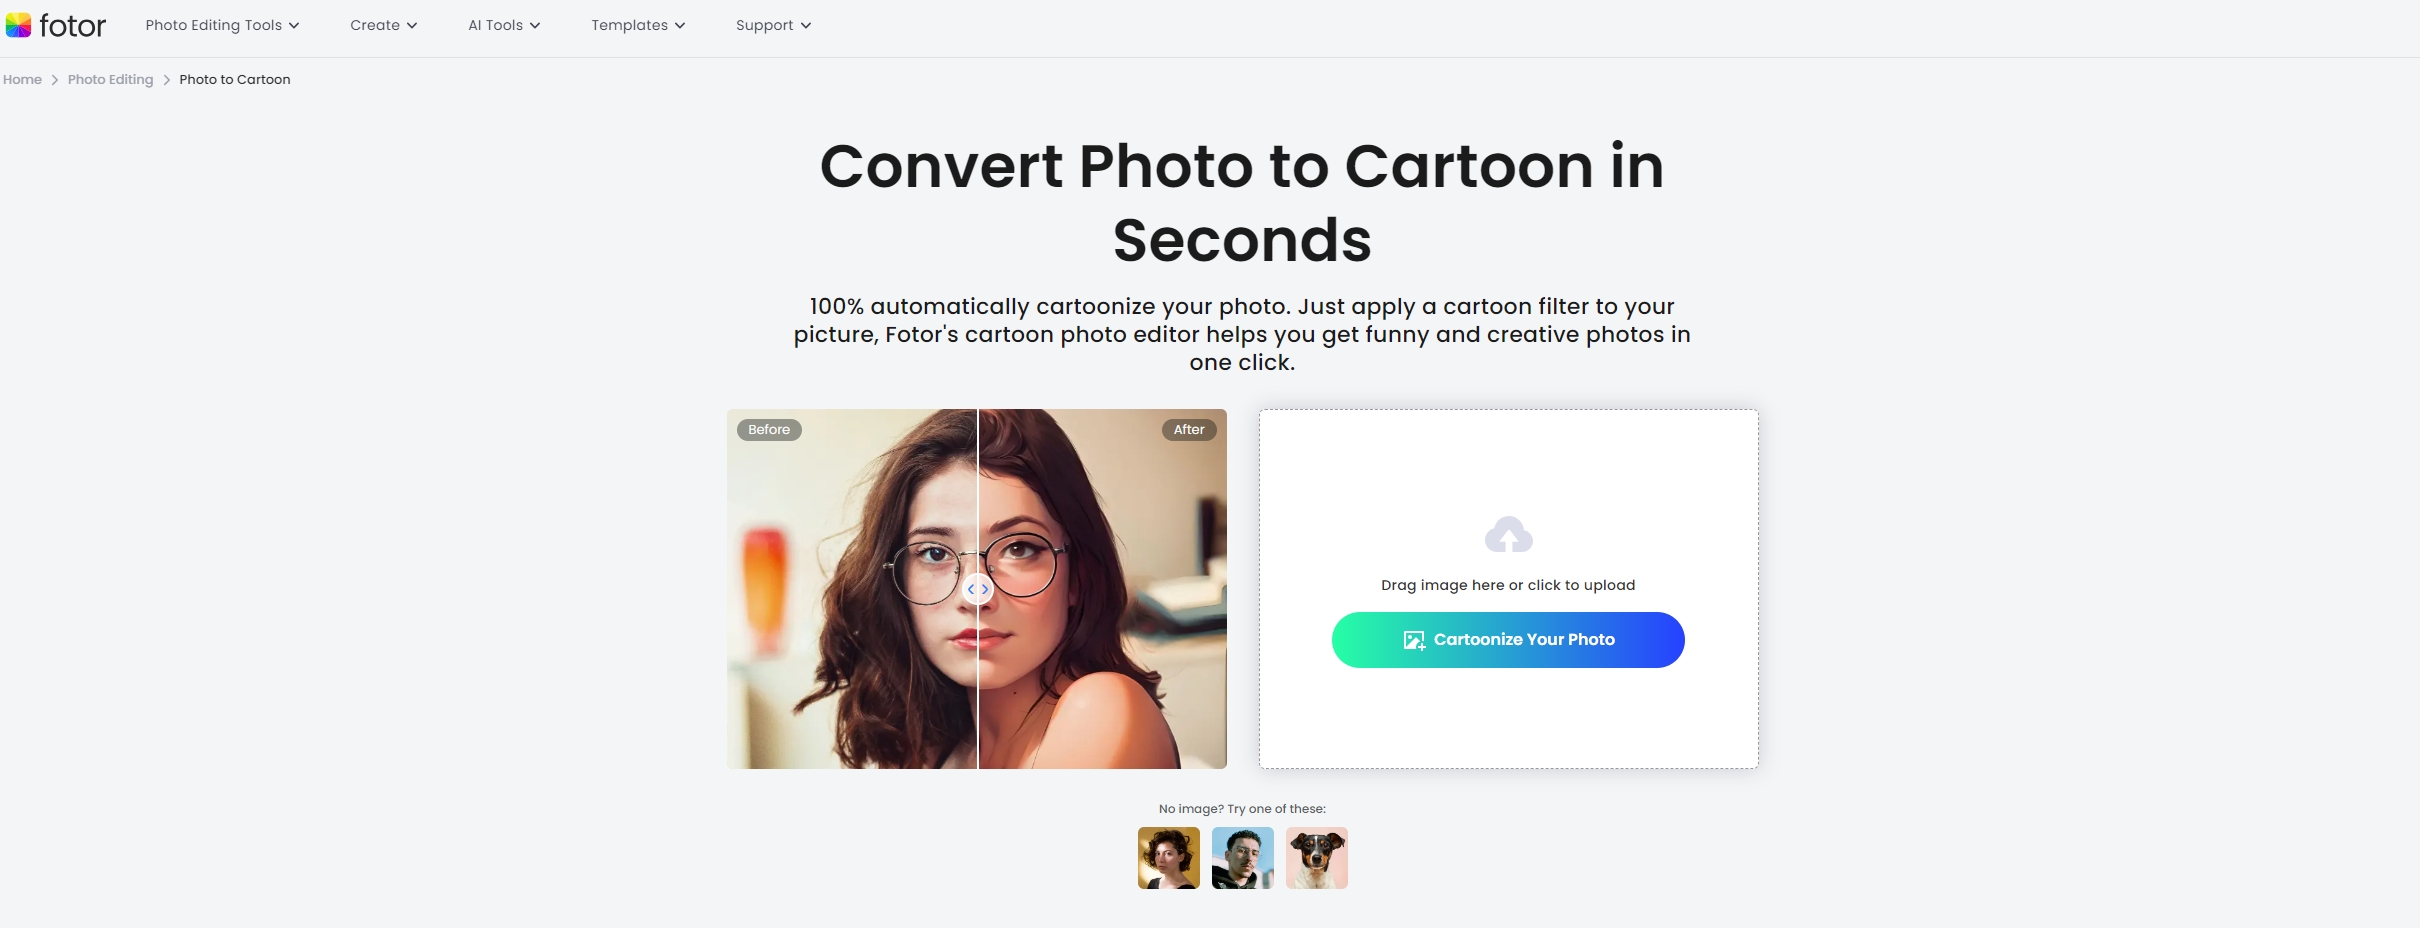 Fotor convert photo to cartoon